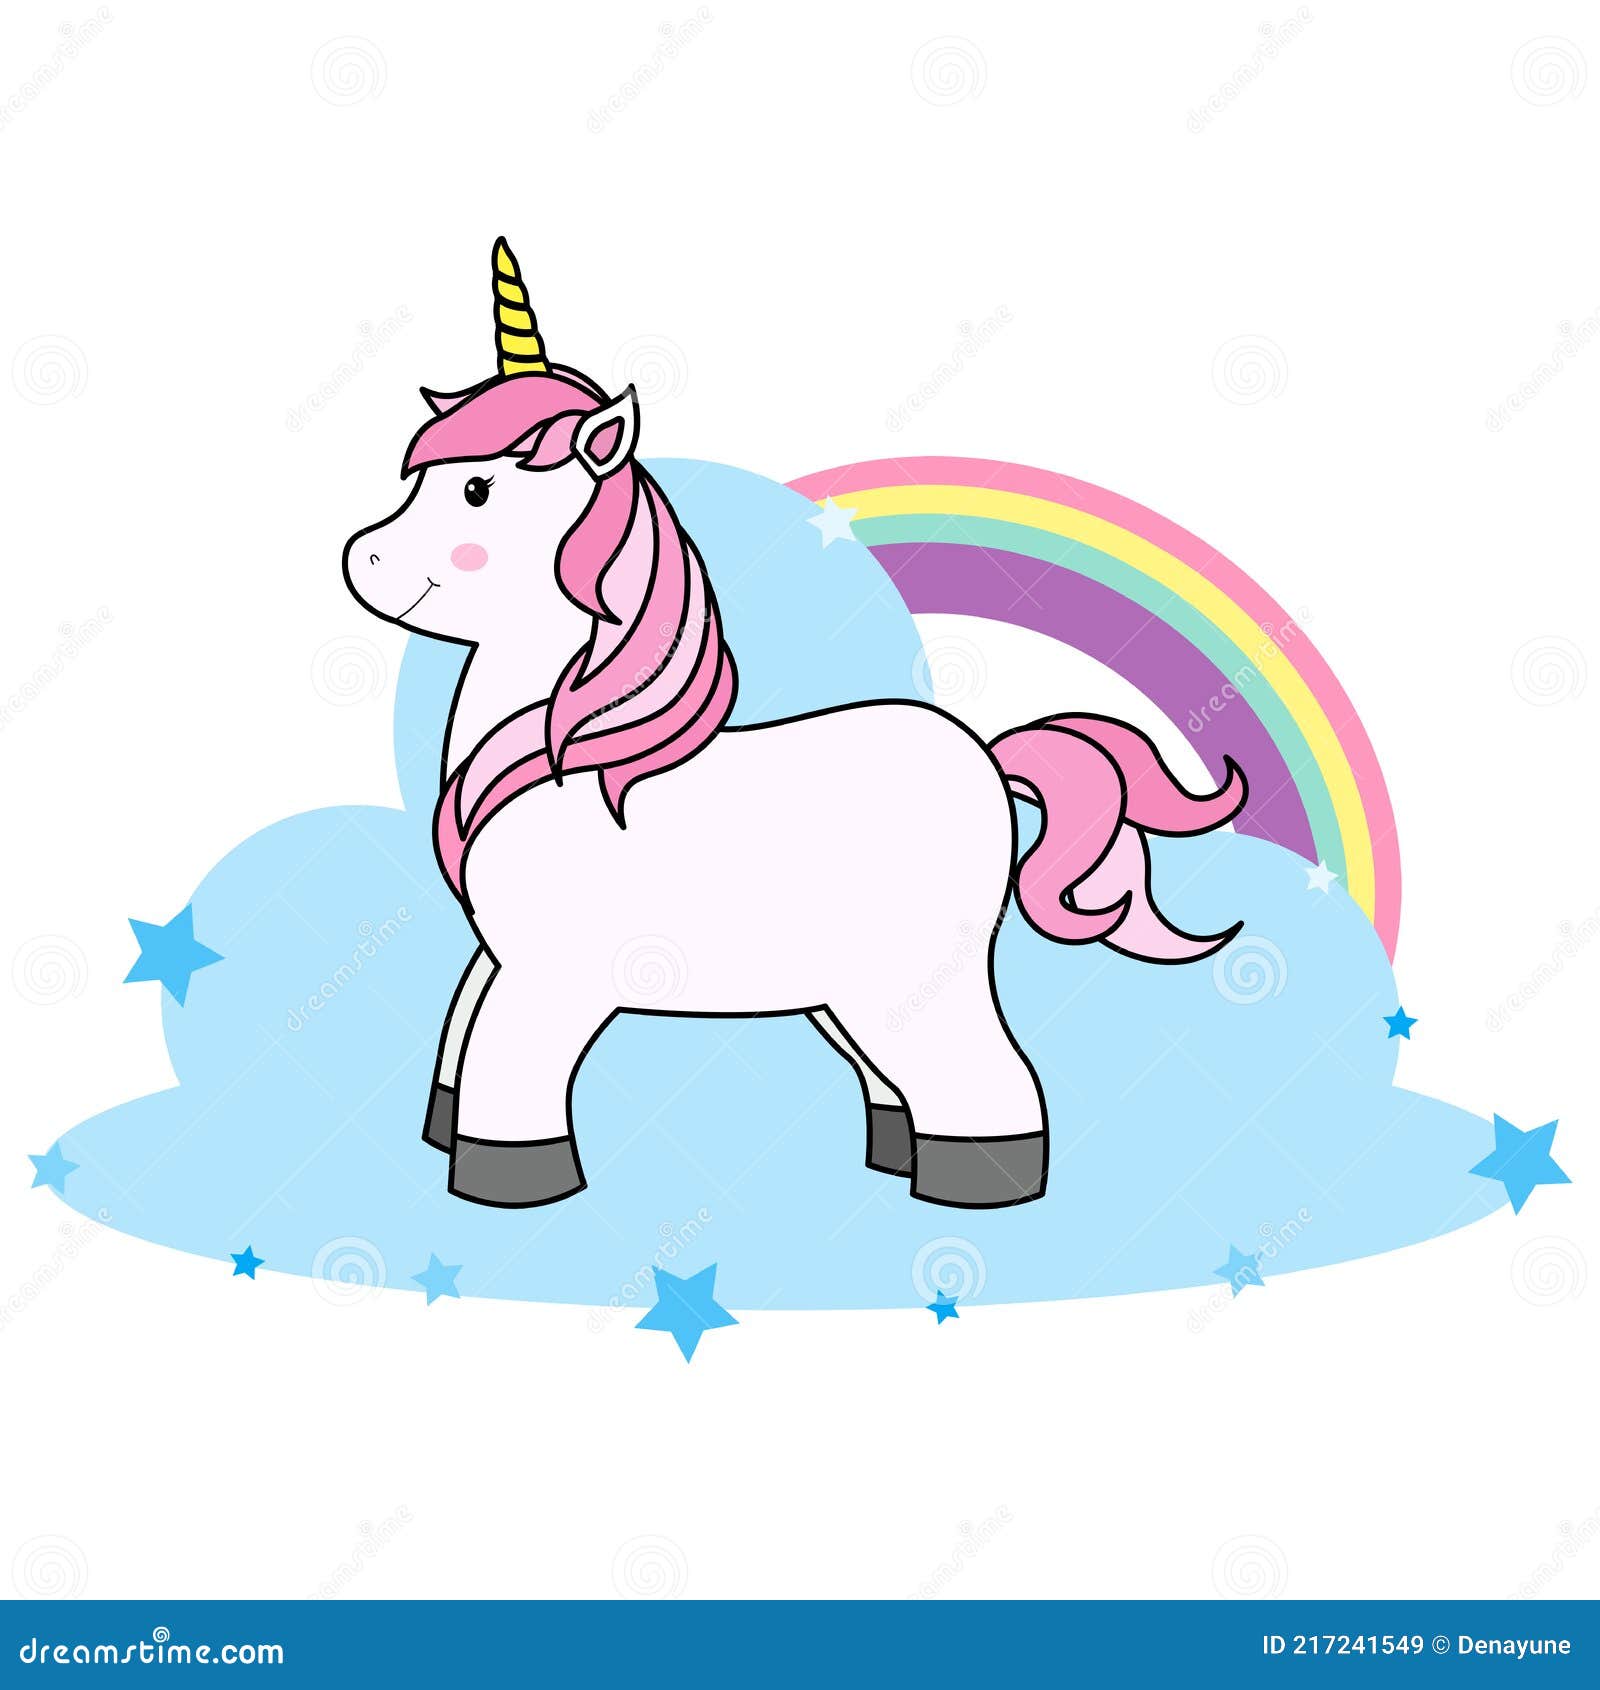 Cute Cartoon Unicorn on Cloud and Rainbow for Print T-shirt or Sticker ...